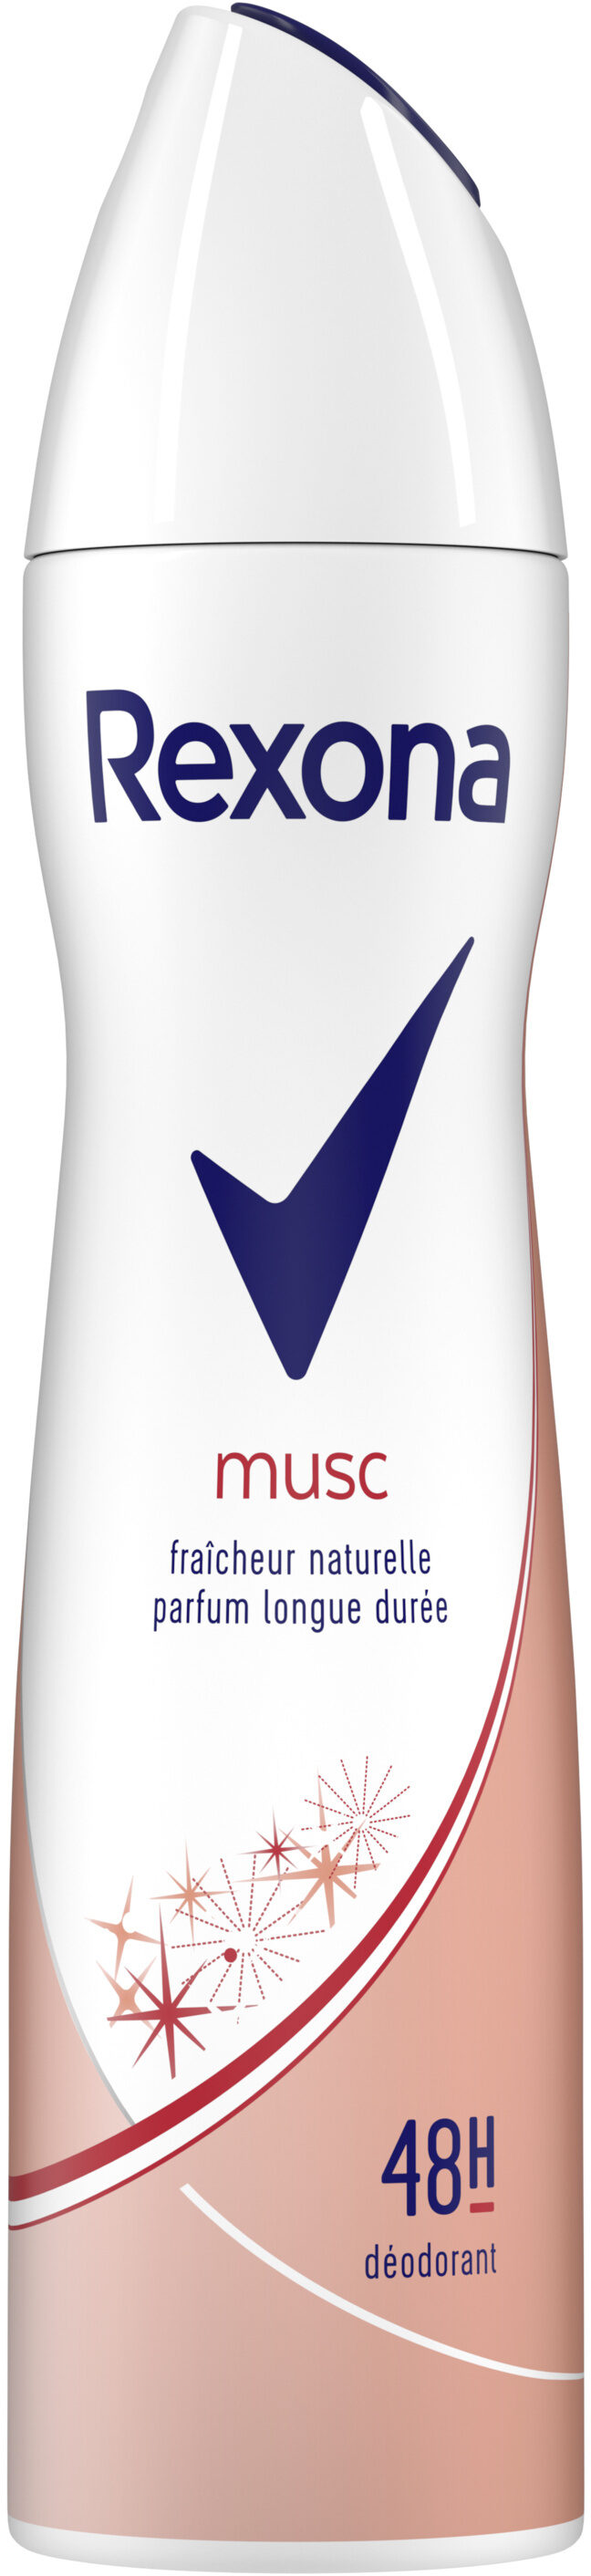 Rfw 200ml spray musc - Produkt - fr